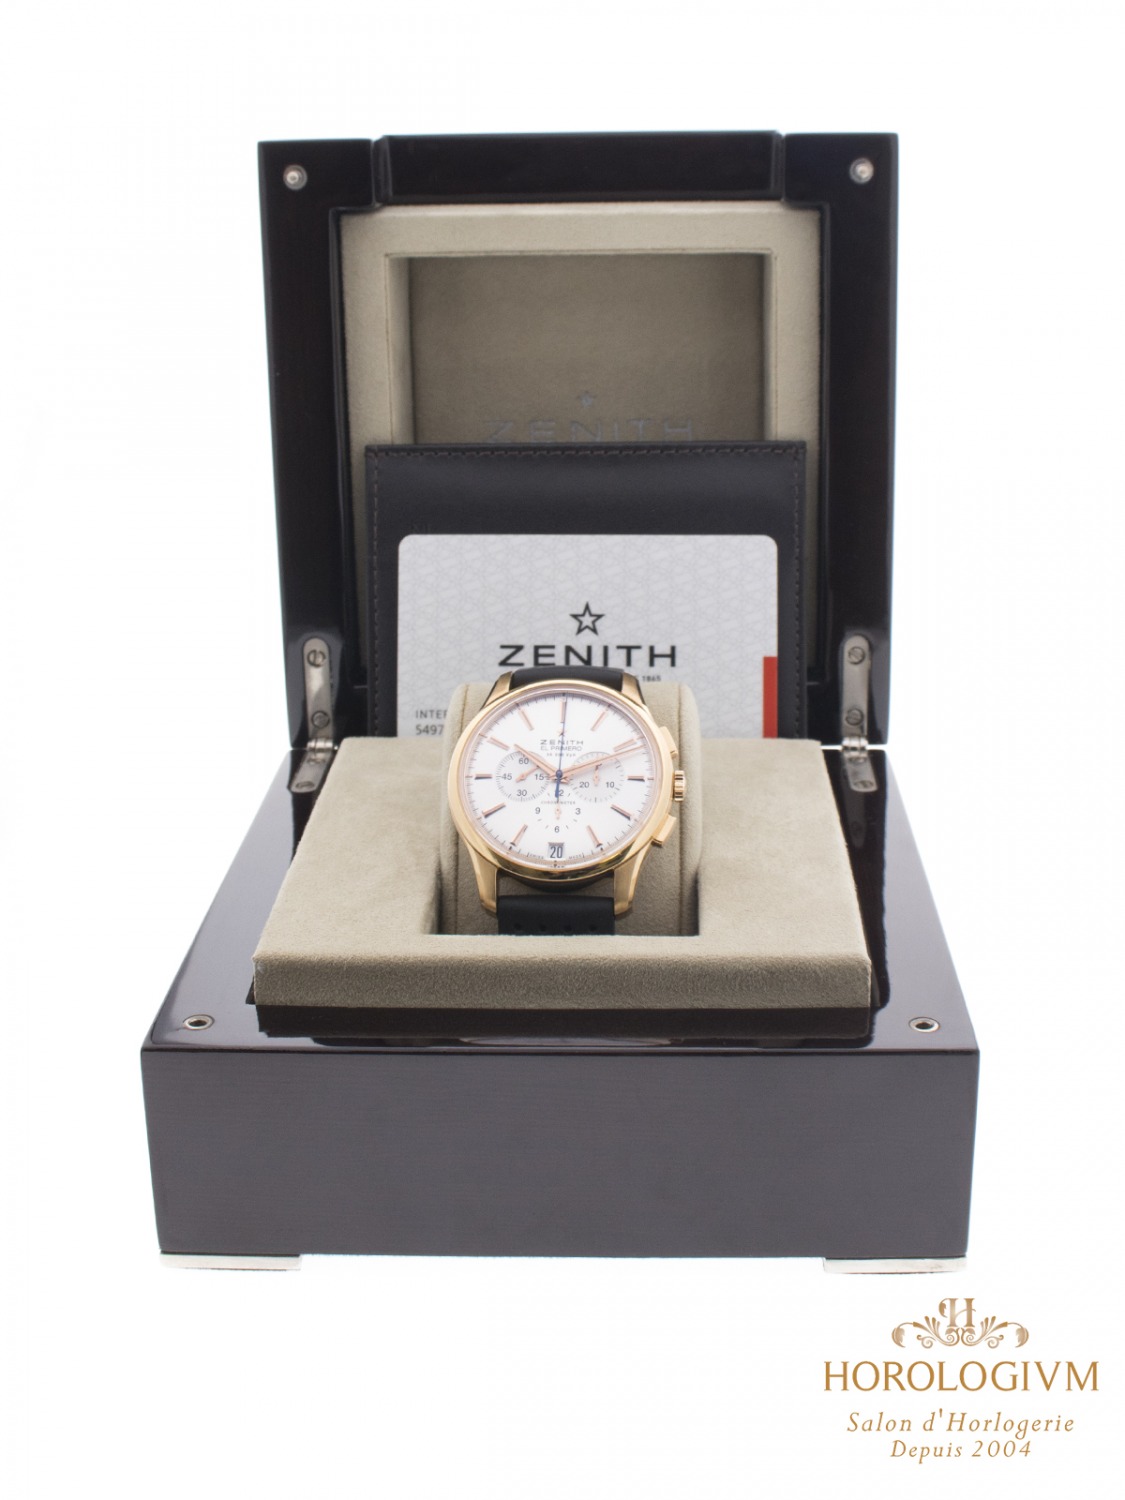 Zenith Capitan El Primero Chronograph 42MM watch, rose gold